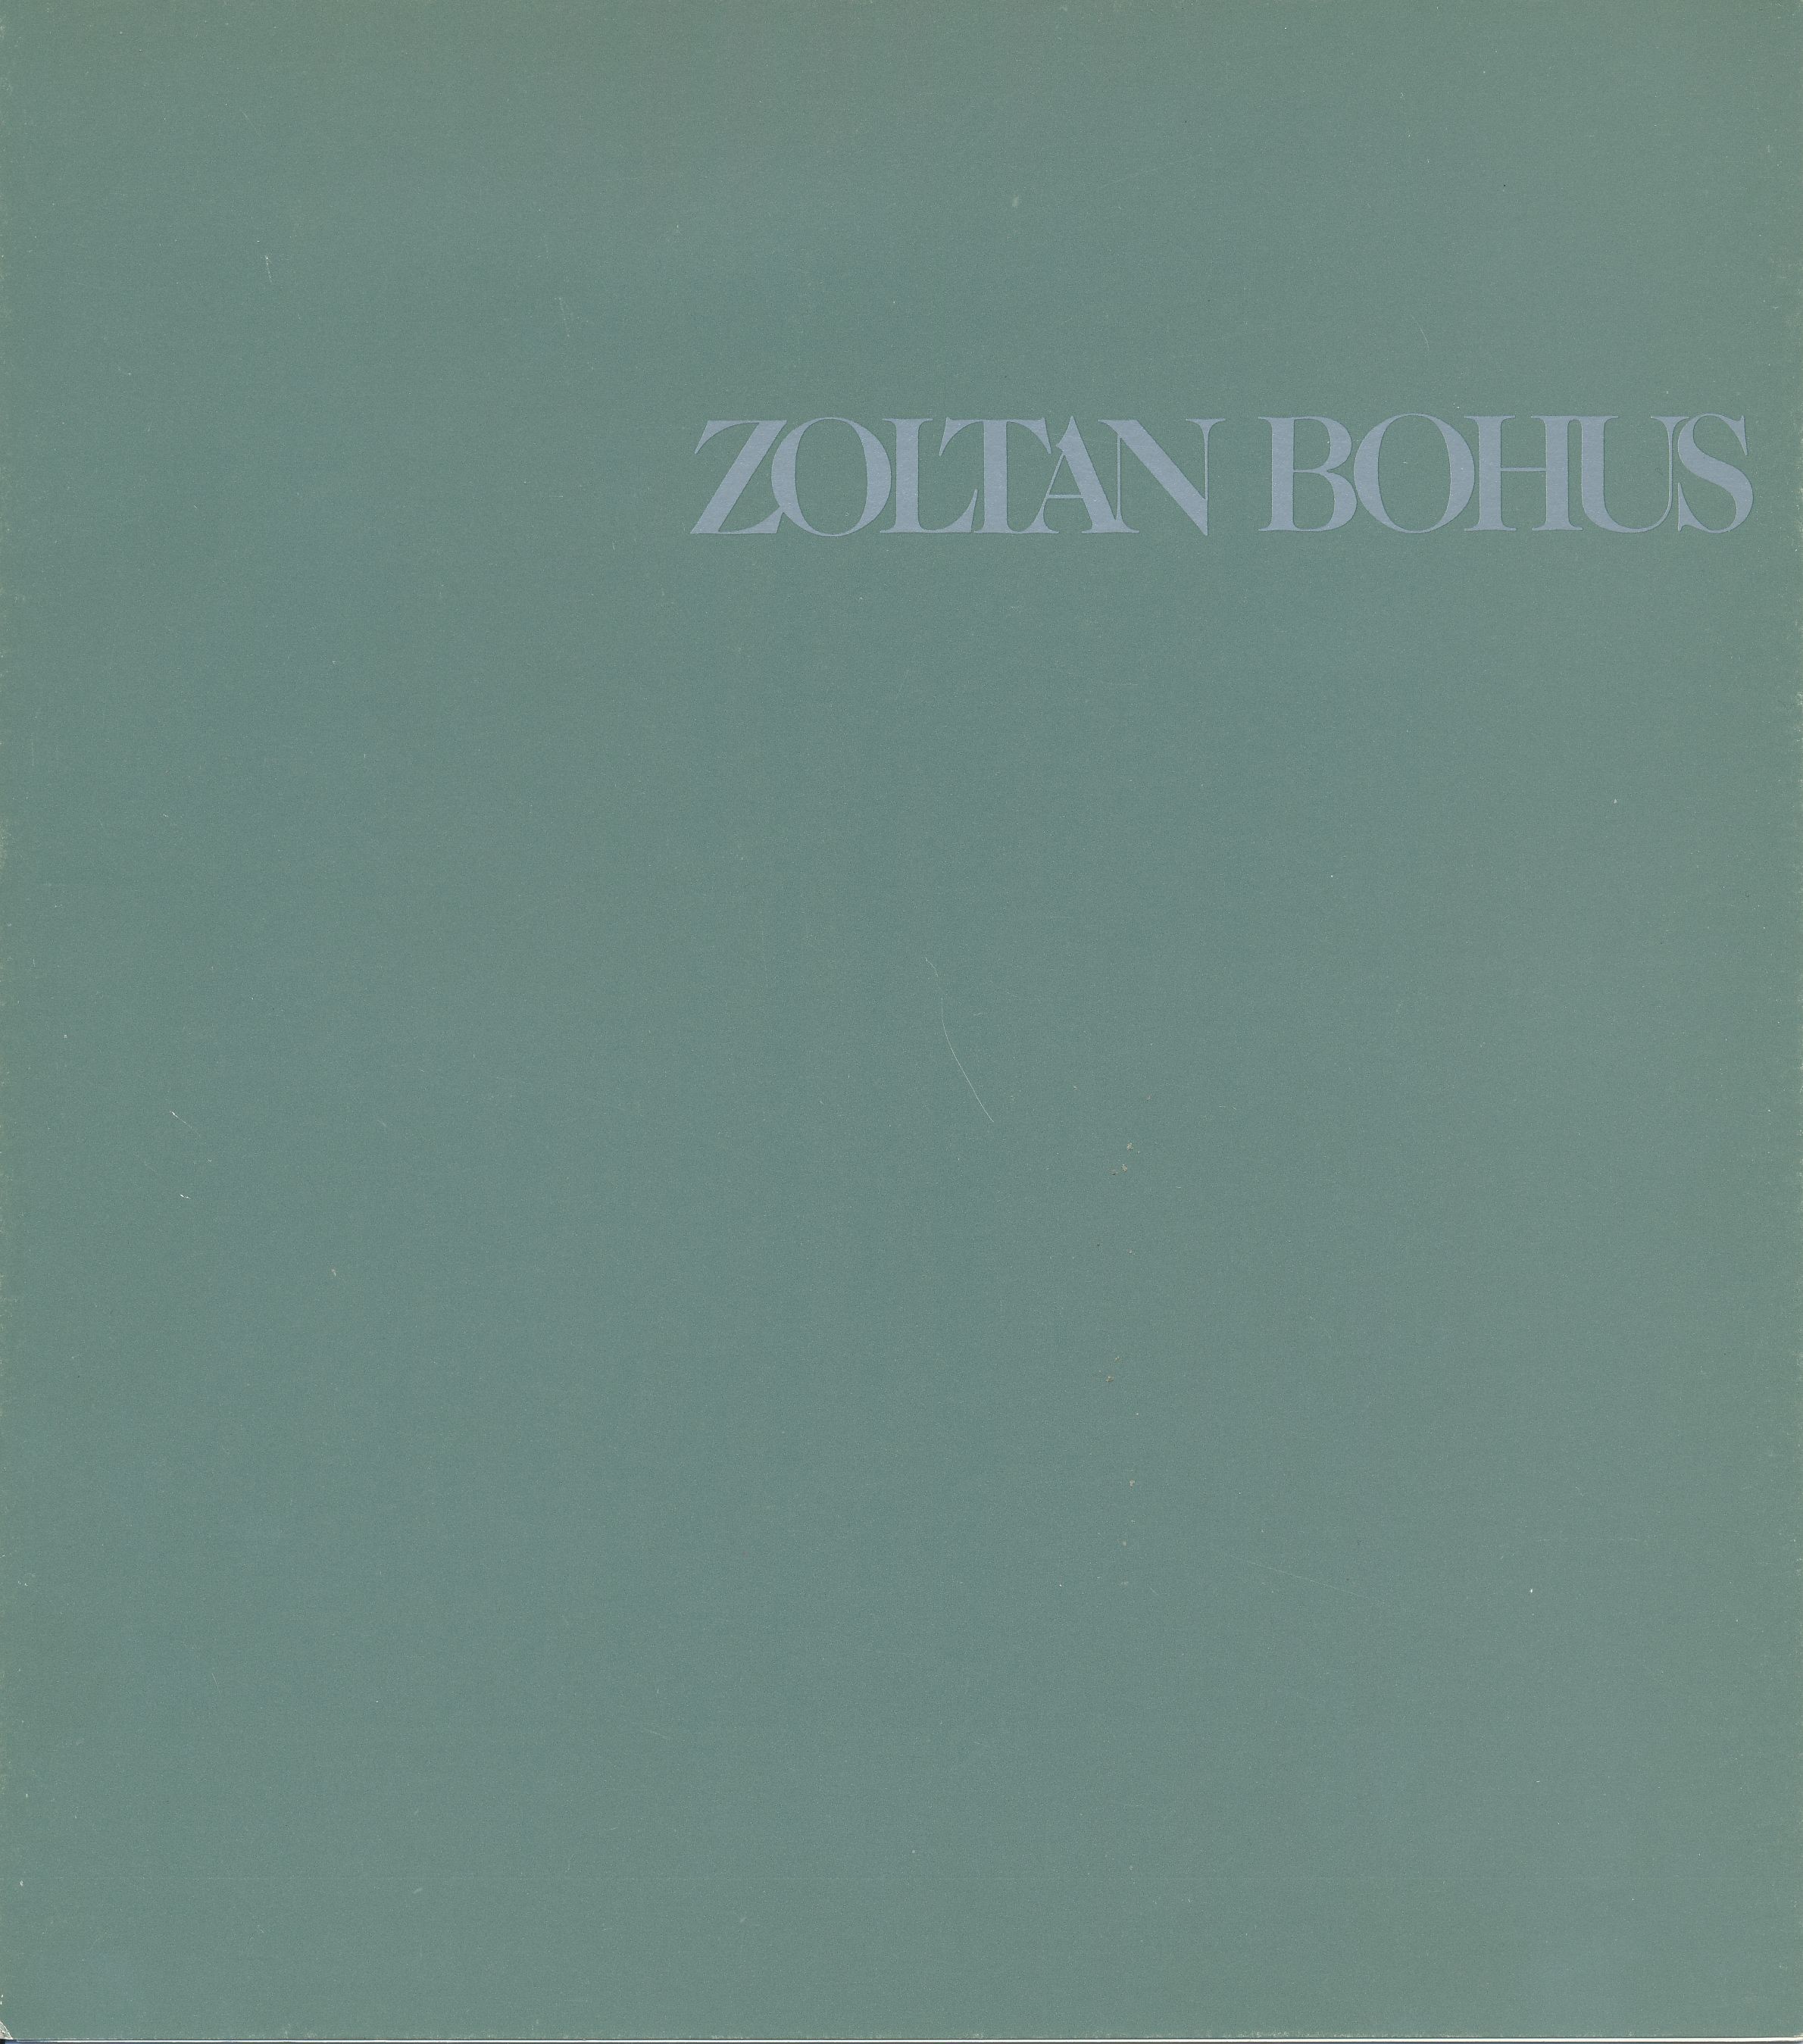 Zoltan Bohus Heller Gallery New York City SOHO Lower Manhattan 1985 október 5-27 (Design DigiTár – Iparművészeti archívum CC BY-NC-SA)